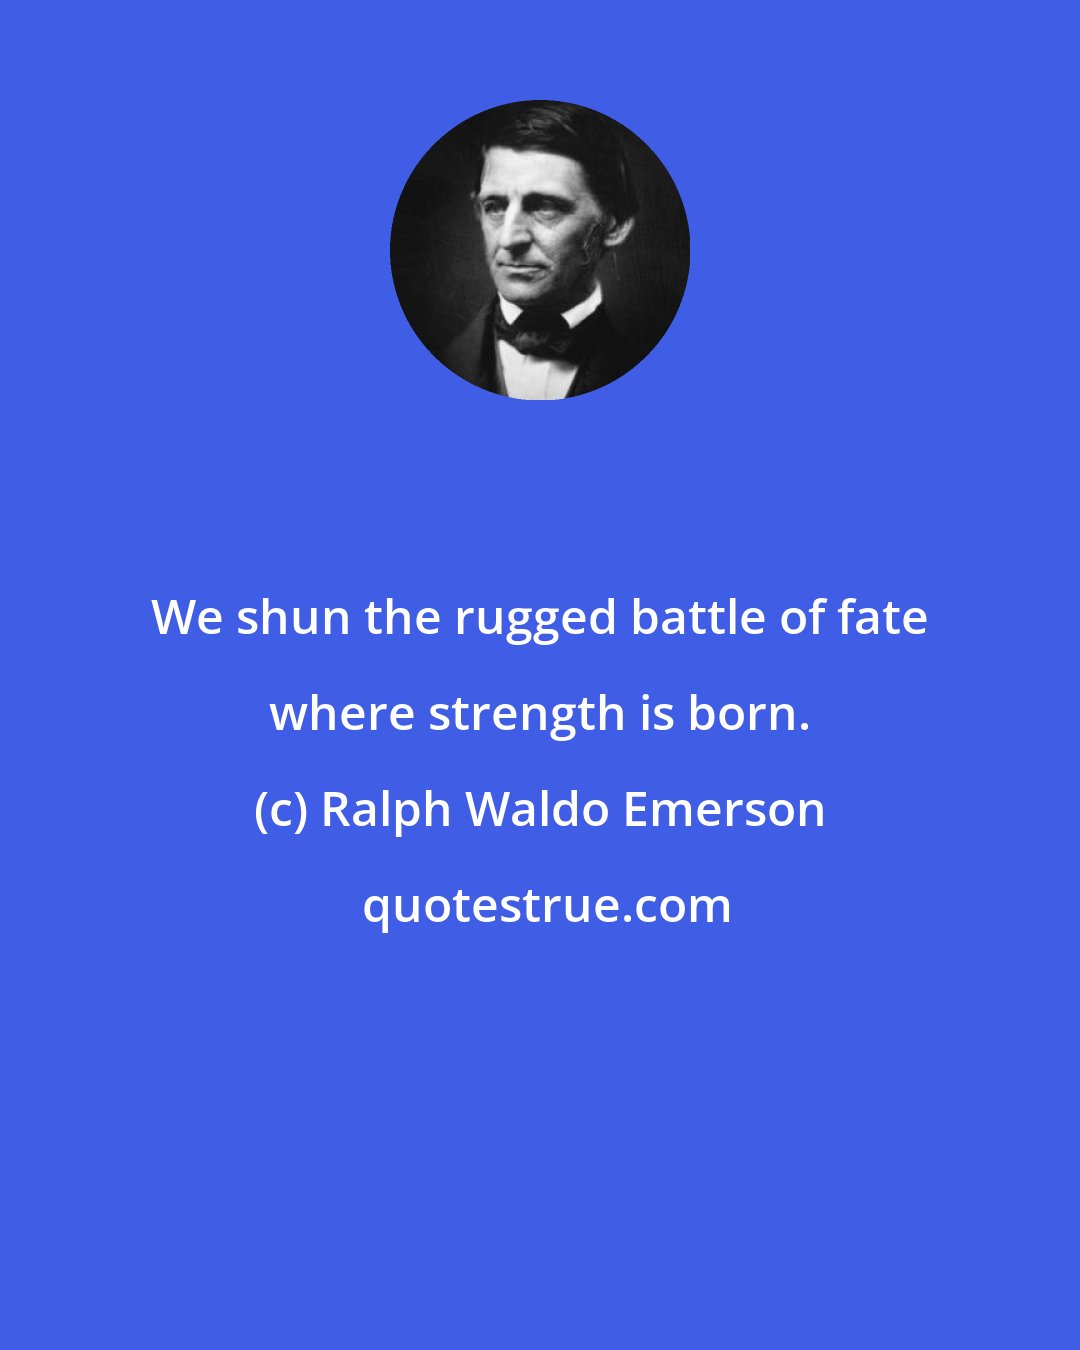 Ralph Waldo Emerson: We shun the rugged battle of fate where strength is born.